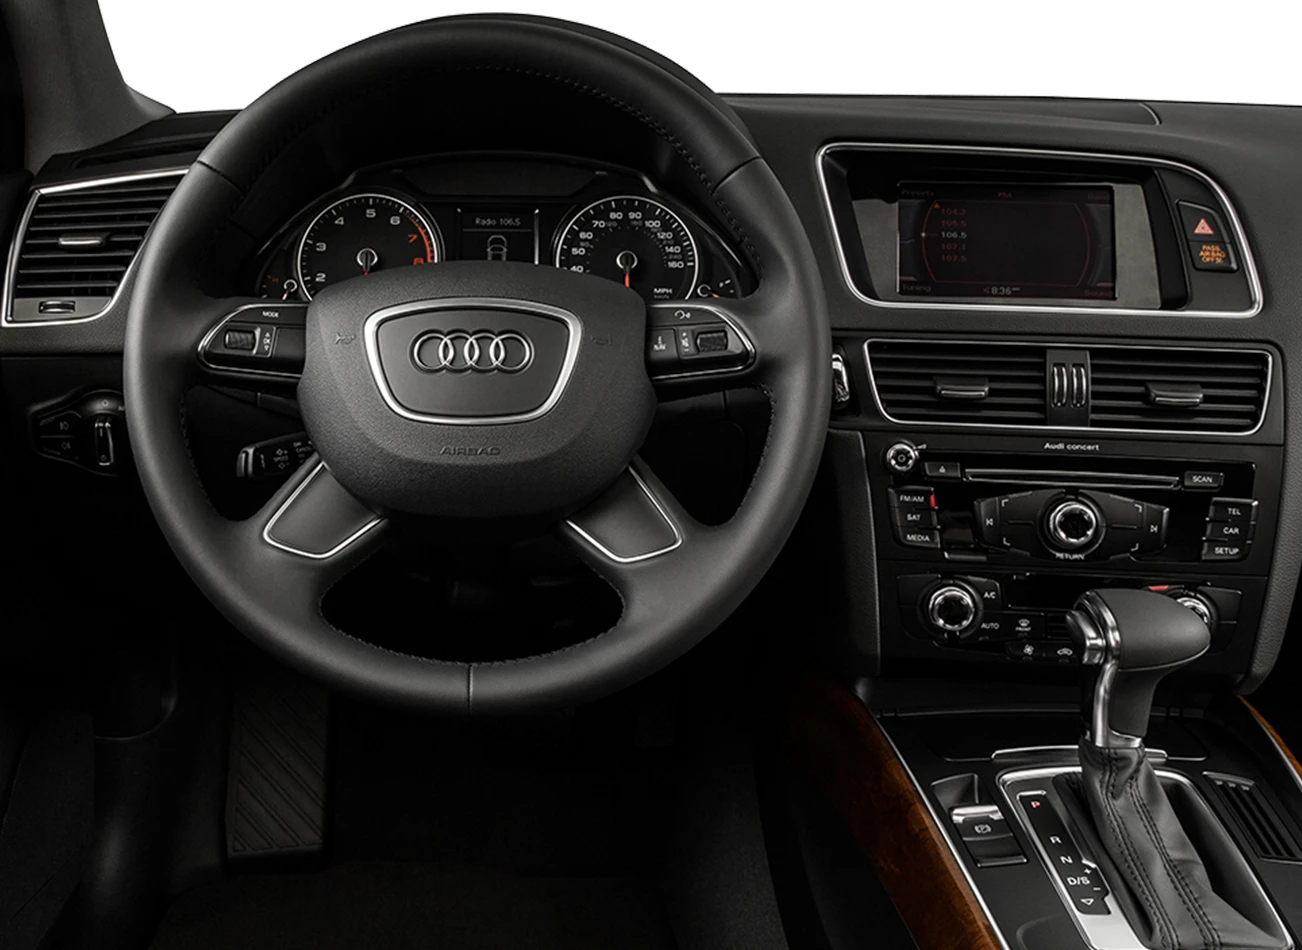 2015 Audi Q5 Review: Reviews, Photos, and More: Reasons to Buy #5 | CarMax